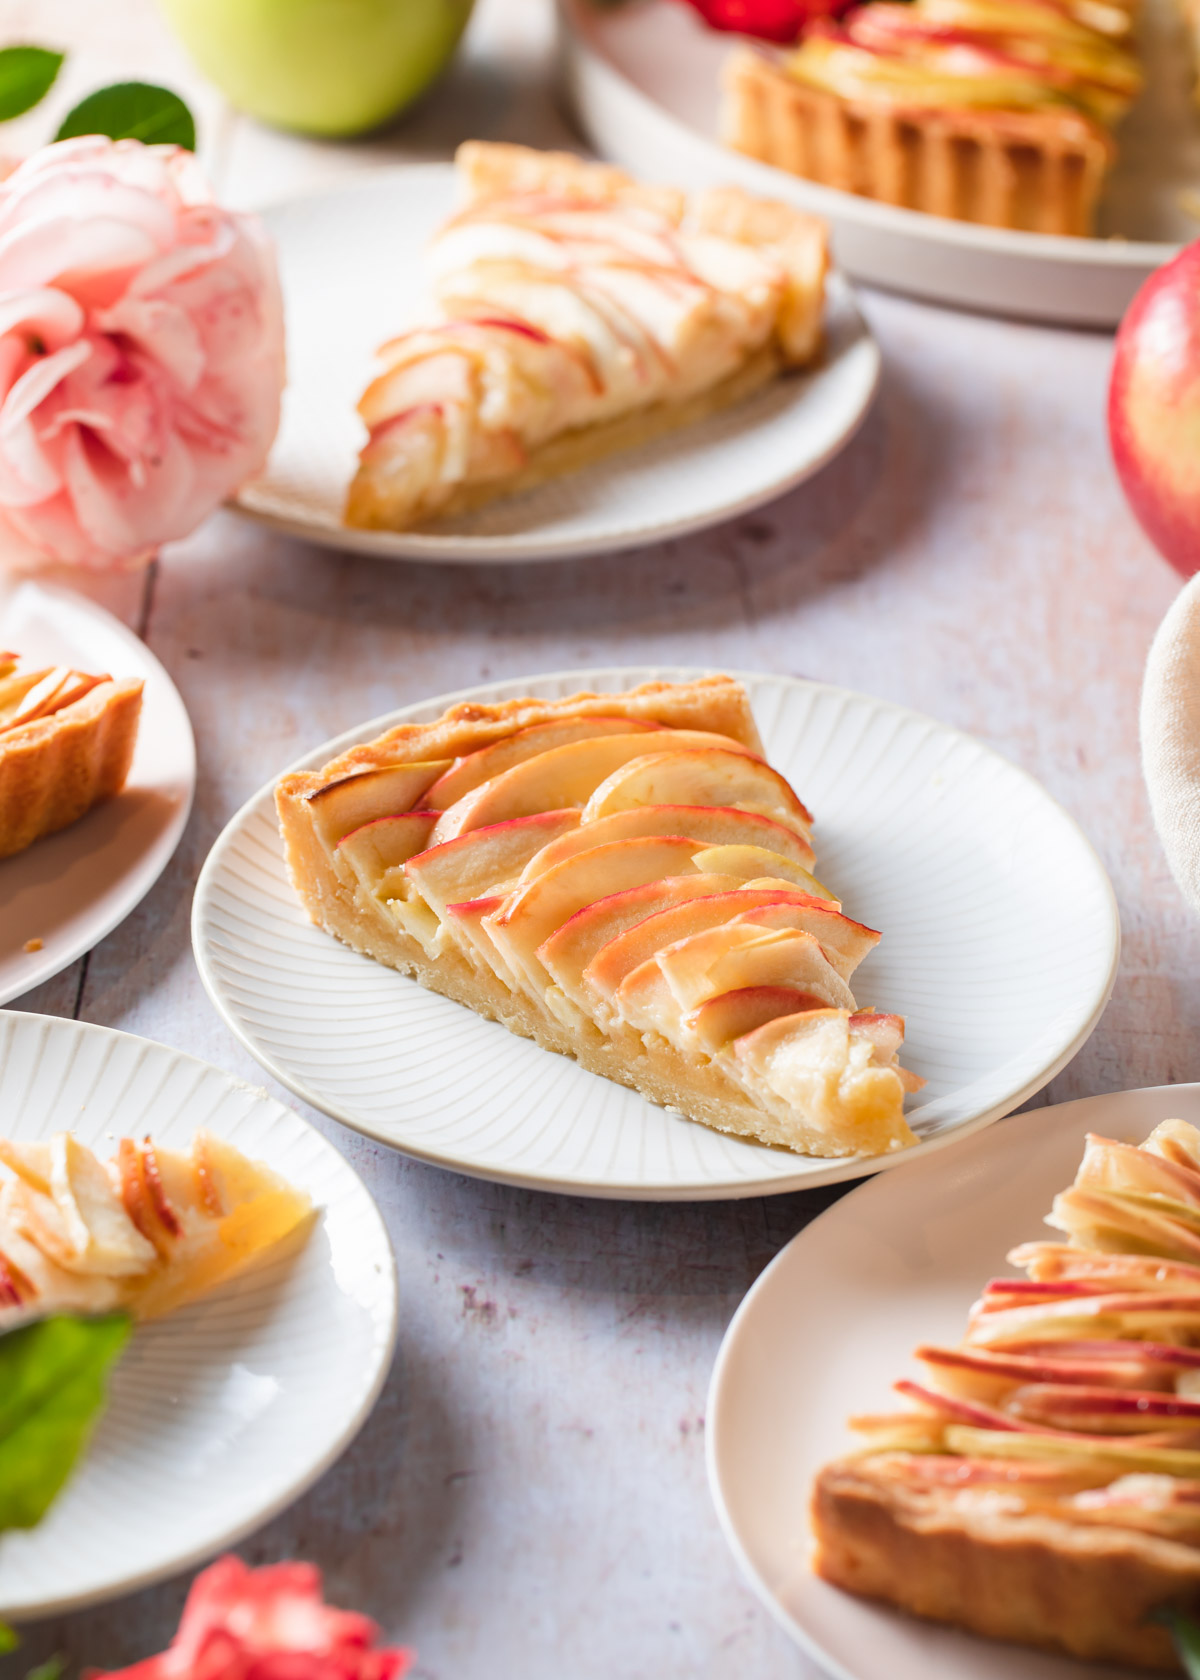 Slices of apple rose tart with almond frangipane filling